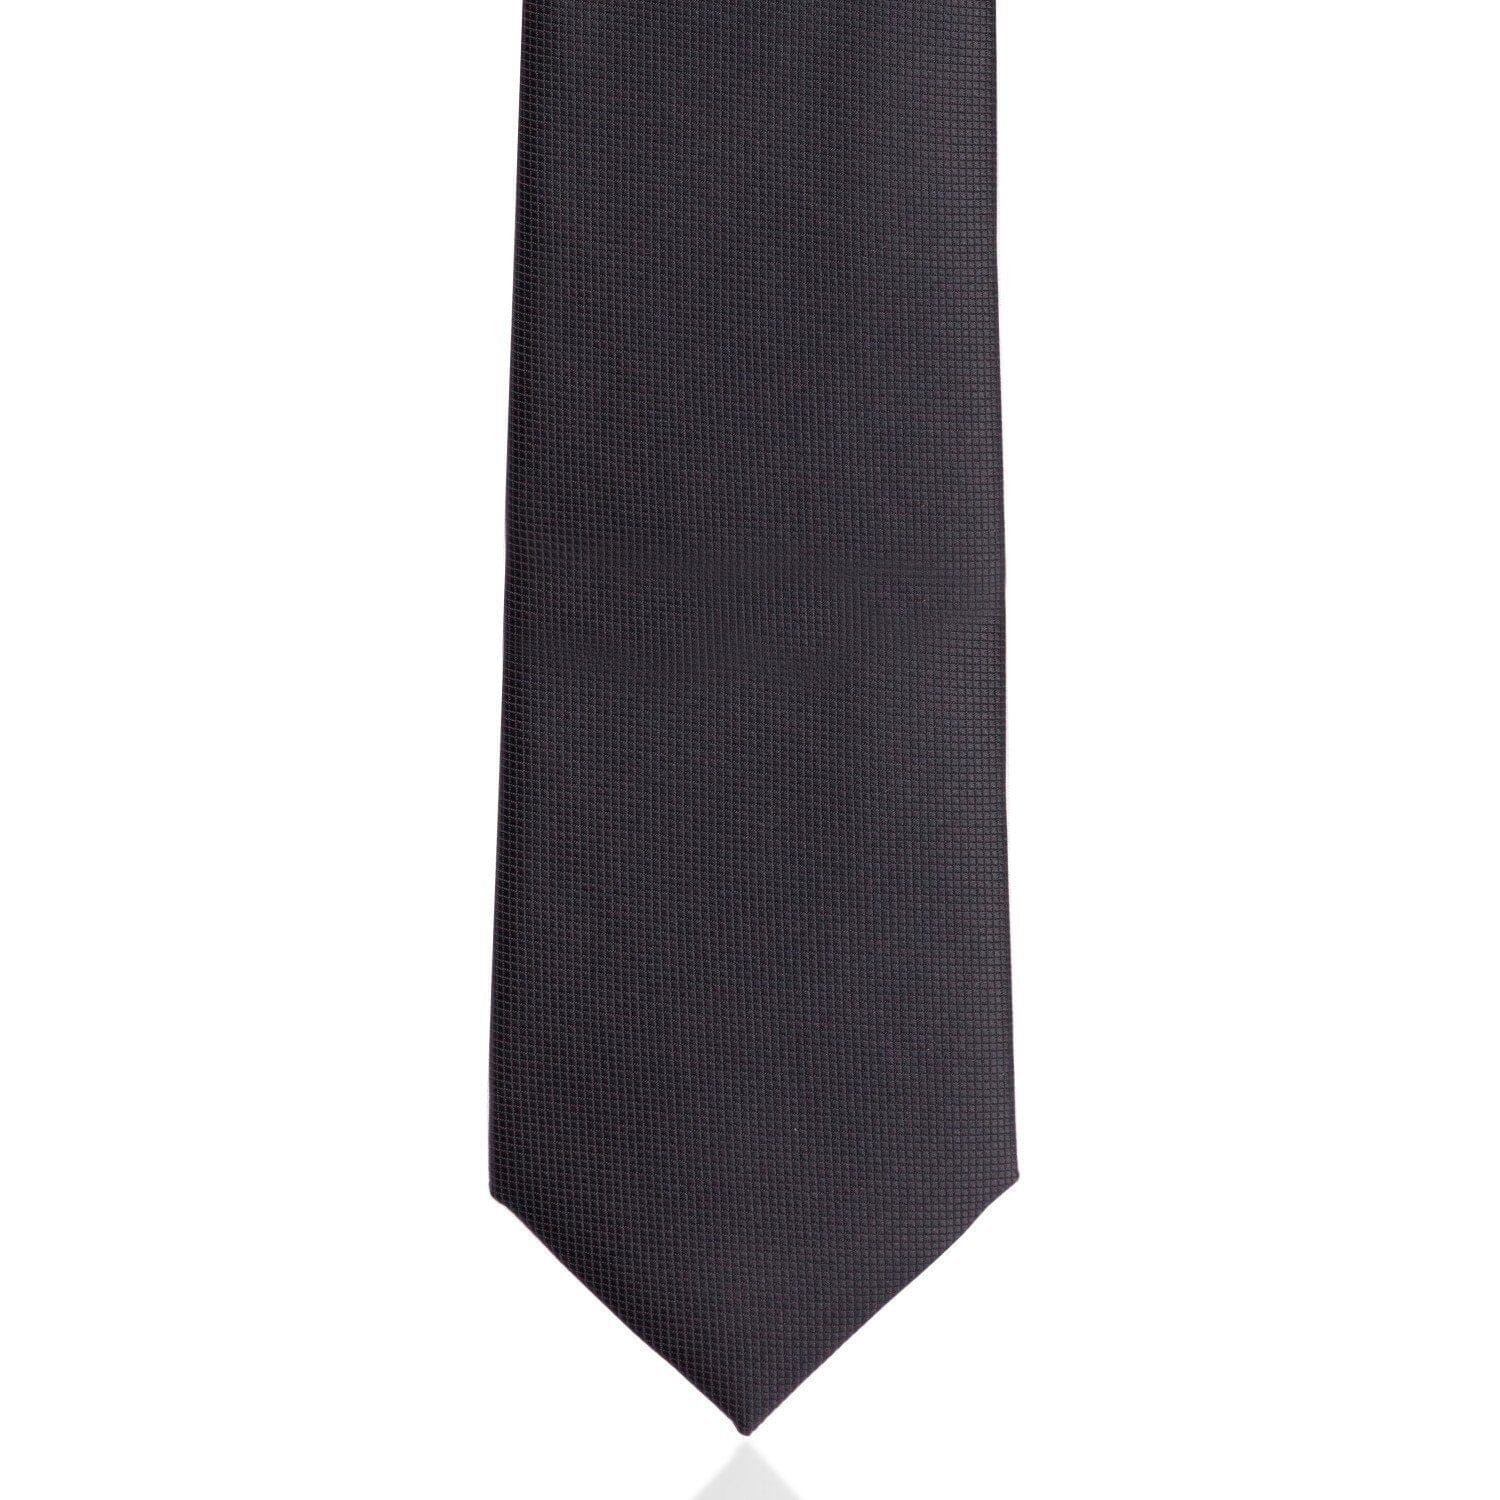 Black MF Tie Ties Cuffed.com.au 